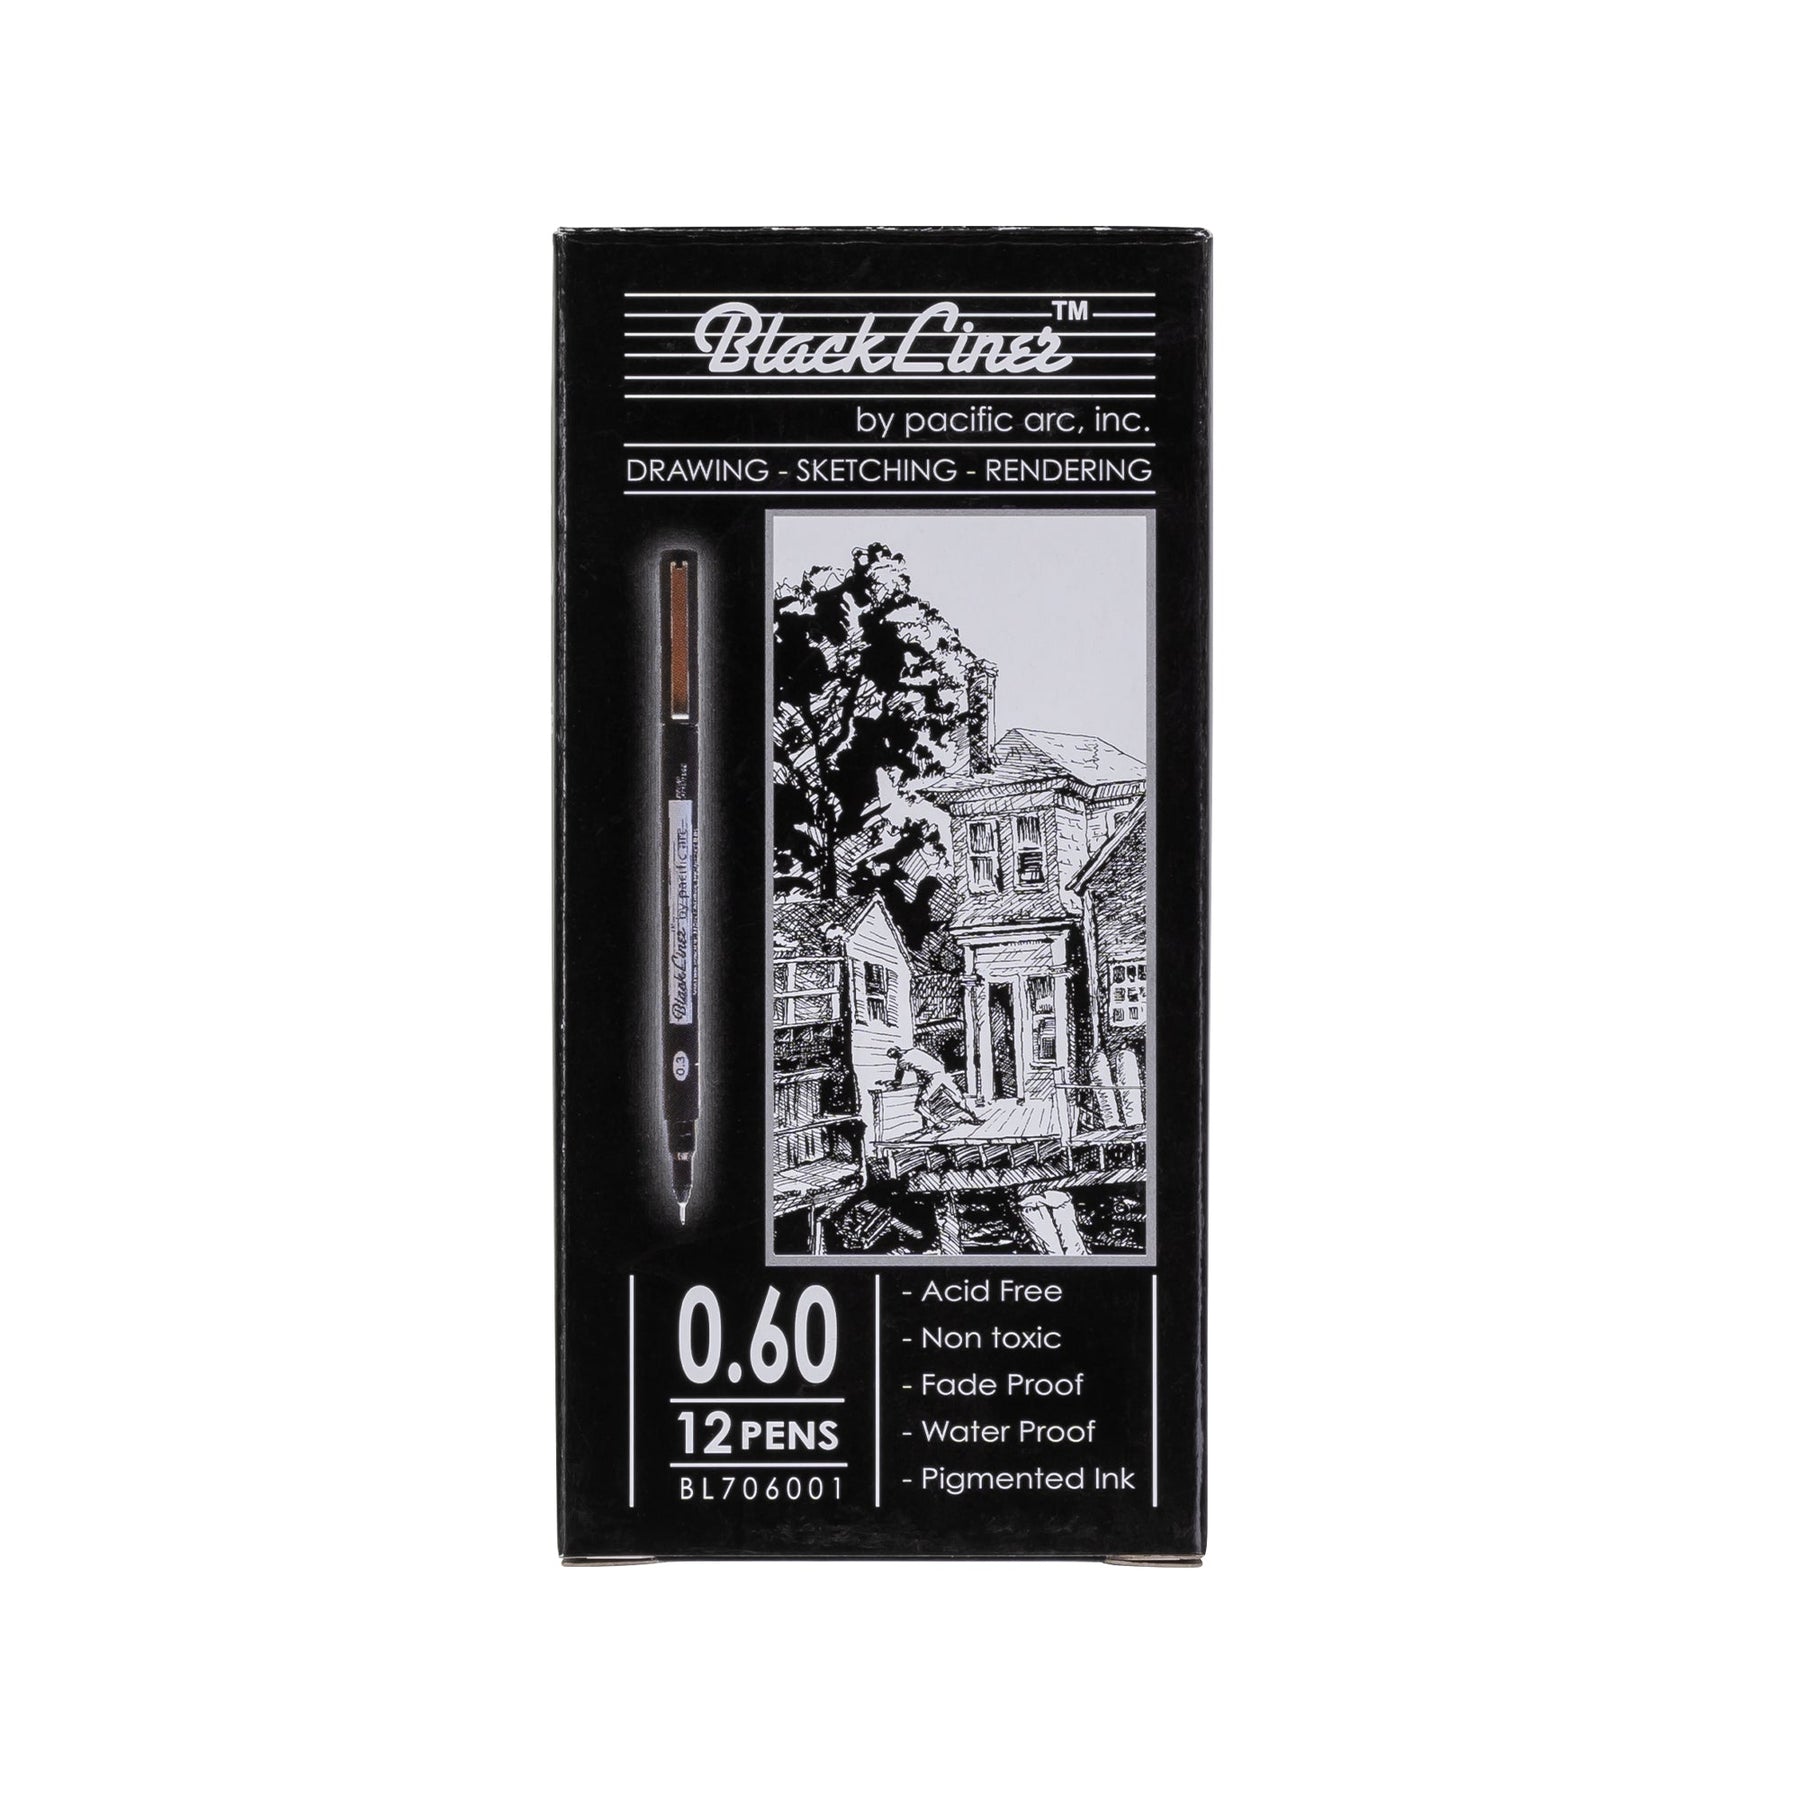 Blackliner Fineliners 8-Pen Set